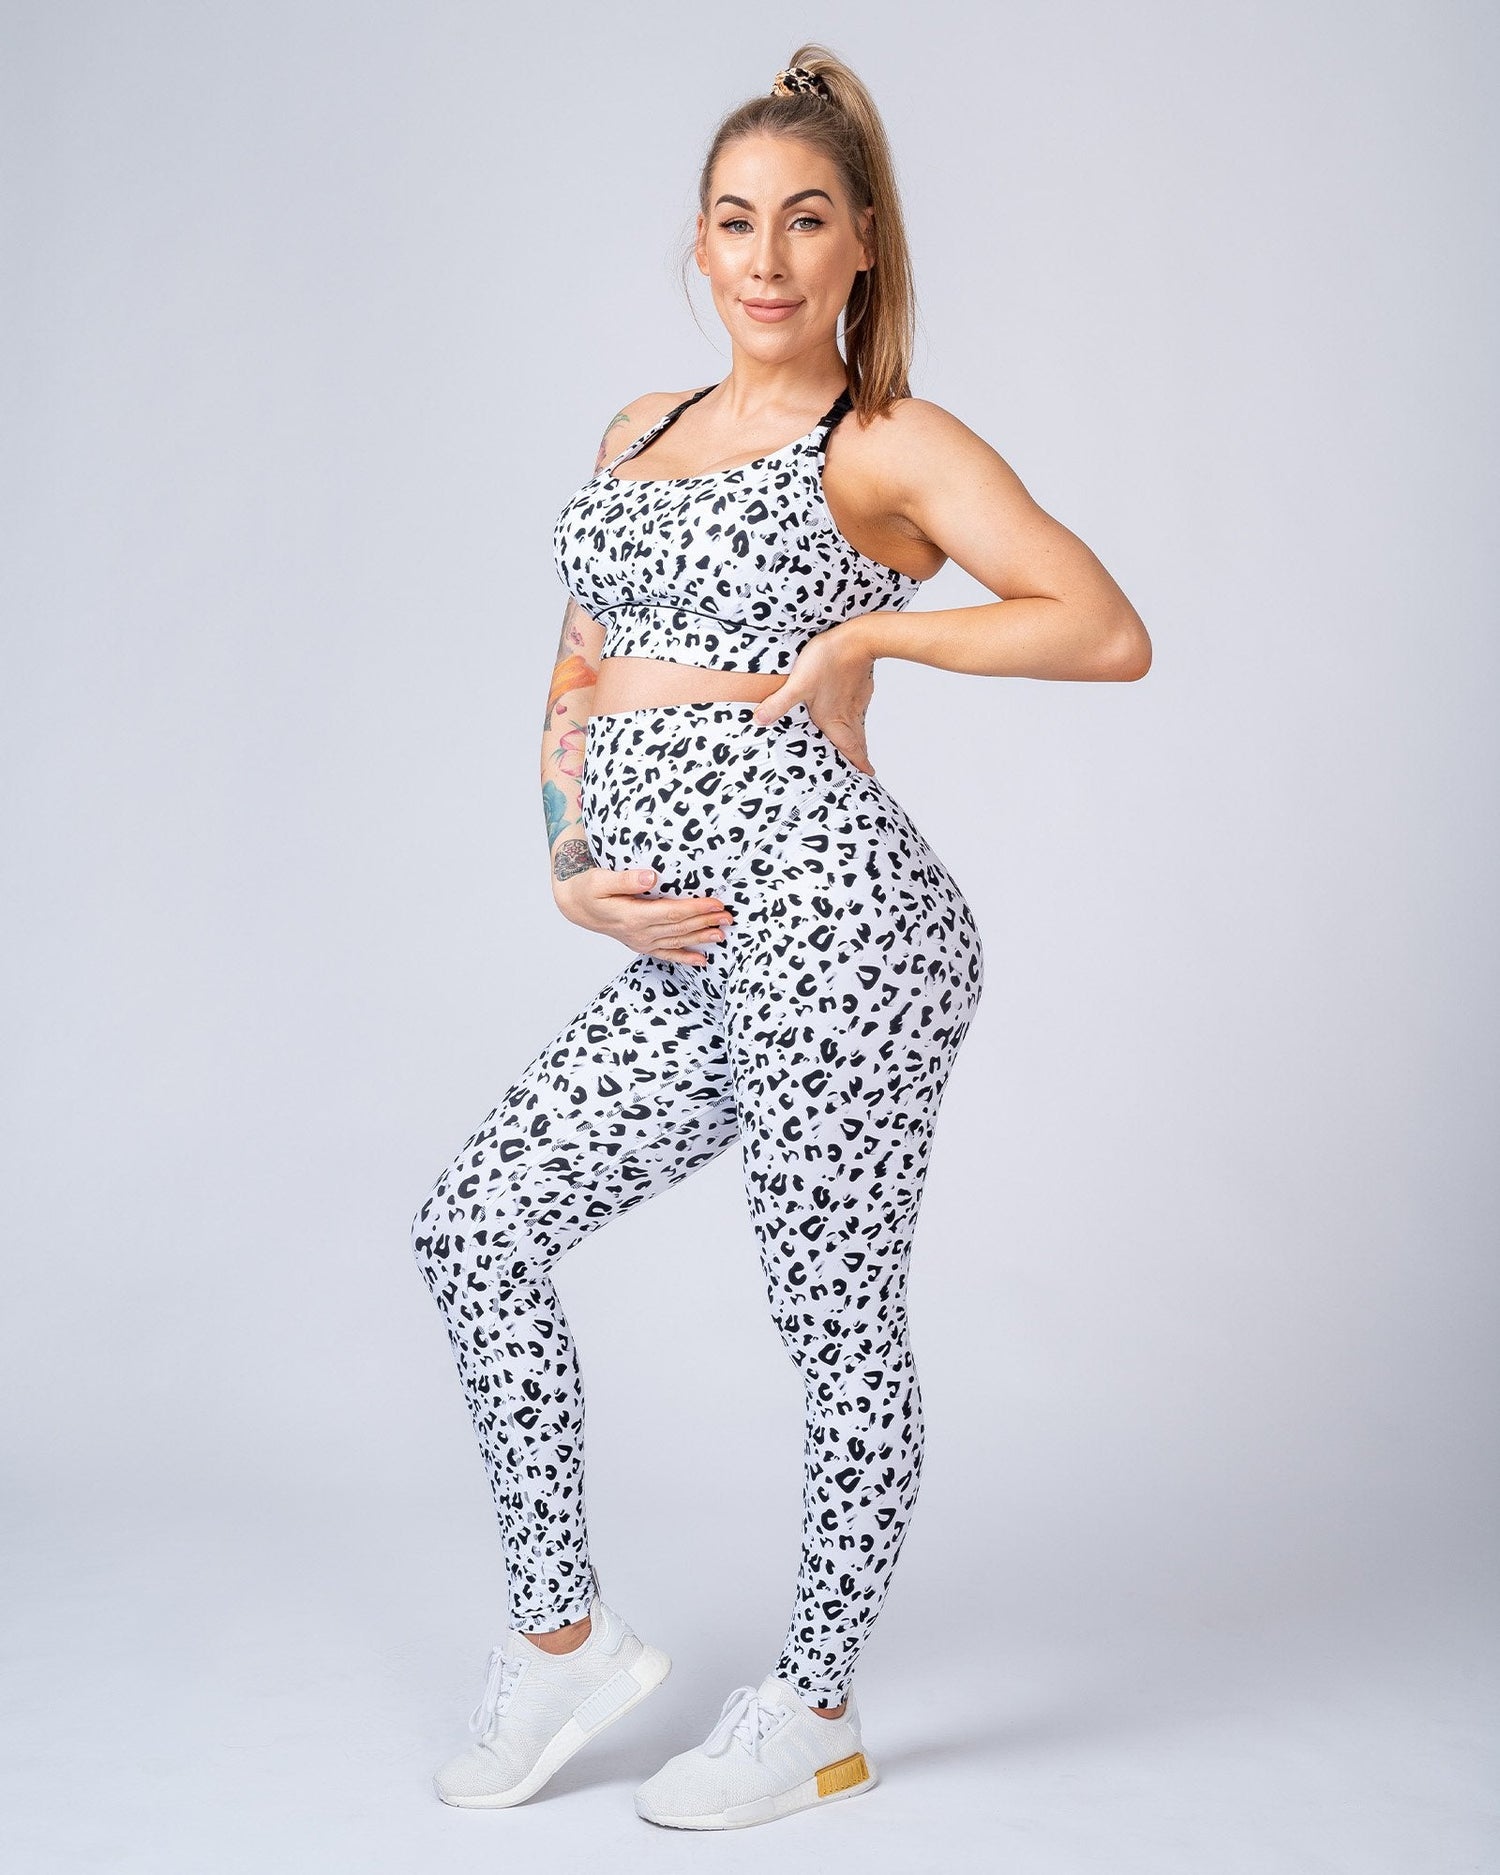 MN Everyday Maternity Bra - Cheetah Print - Muscle Nation